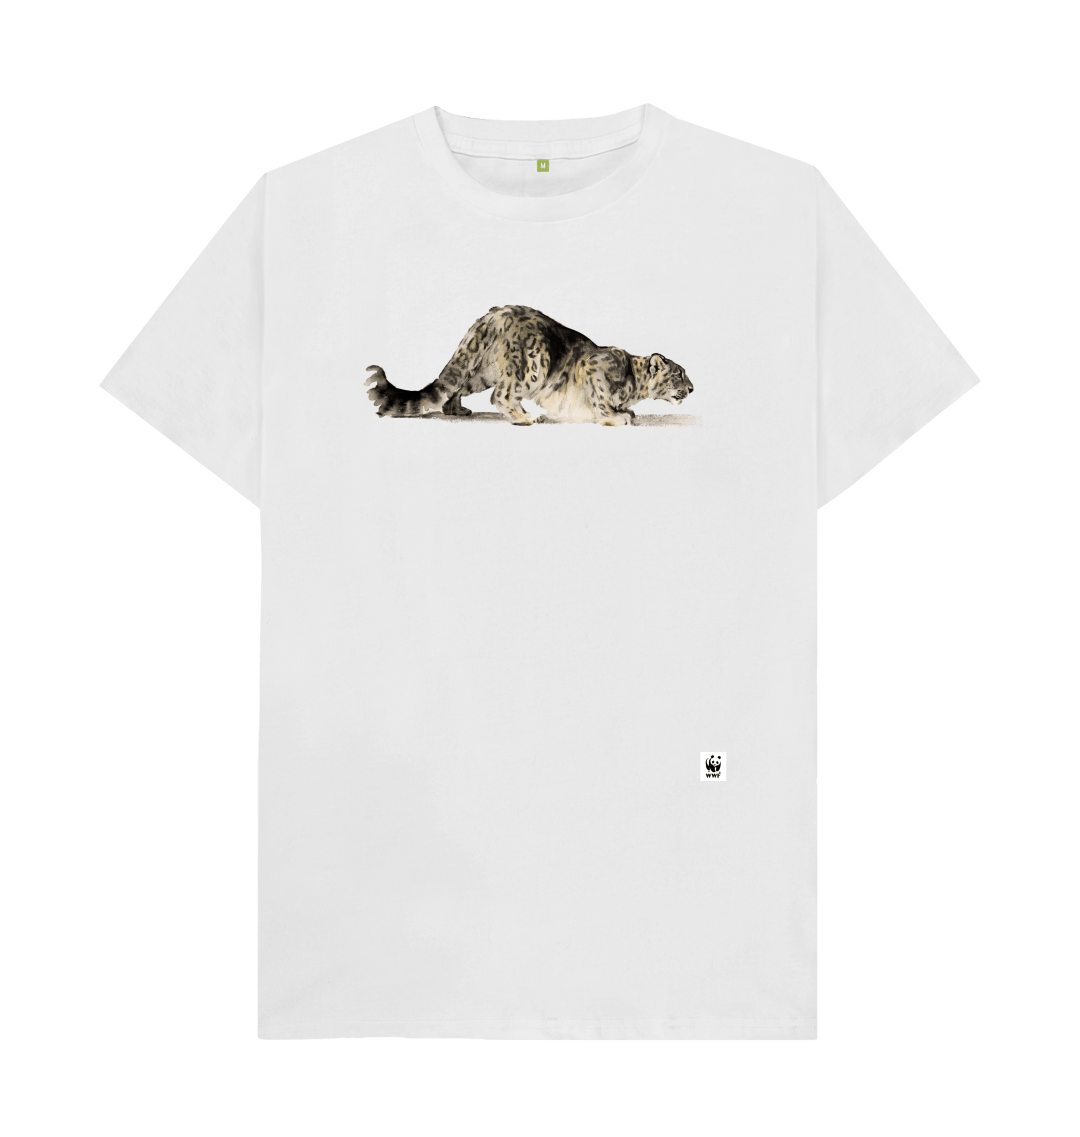 Snow Leopard T-shirt by Kate Vannelli